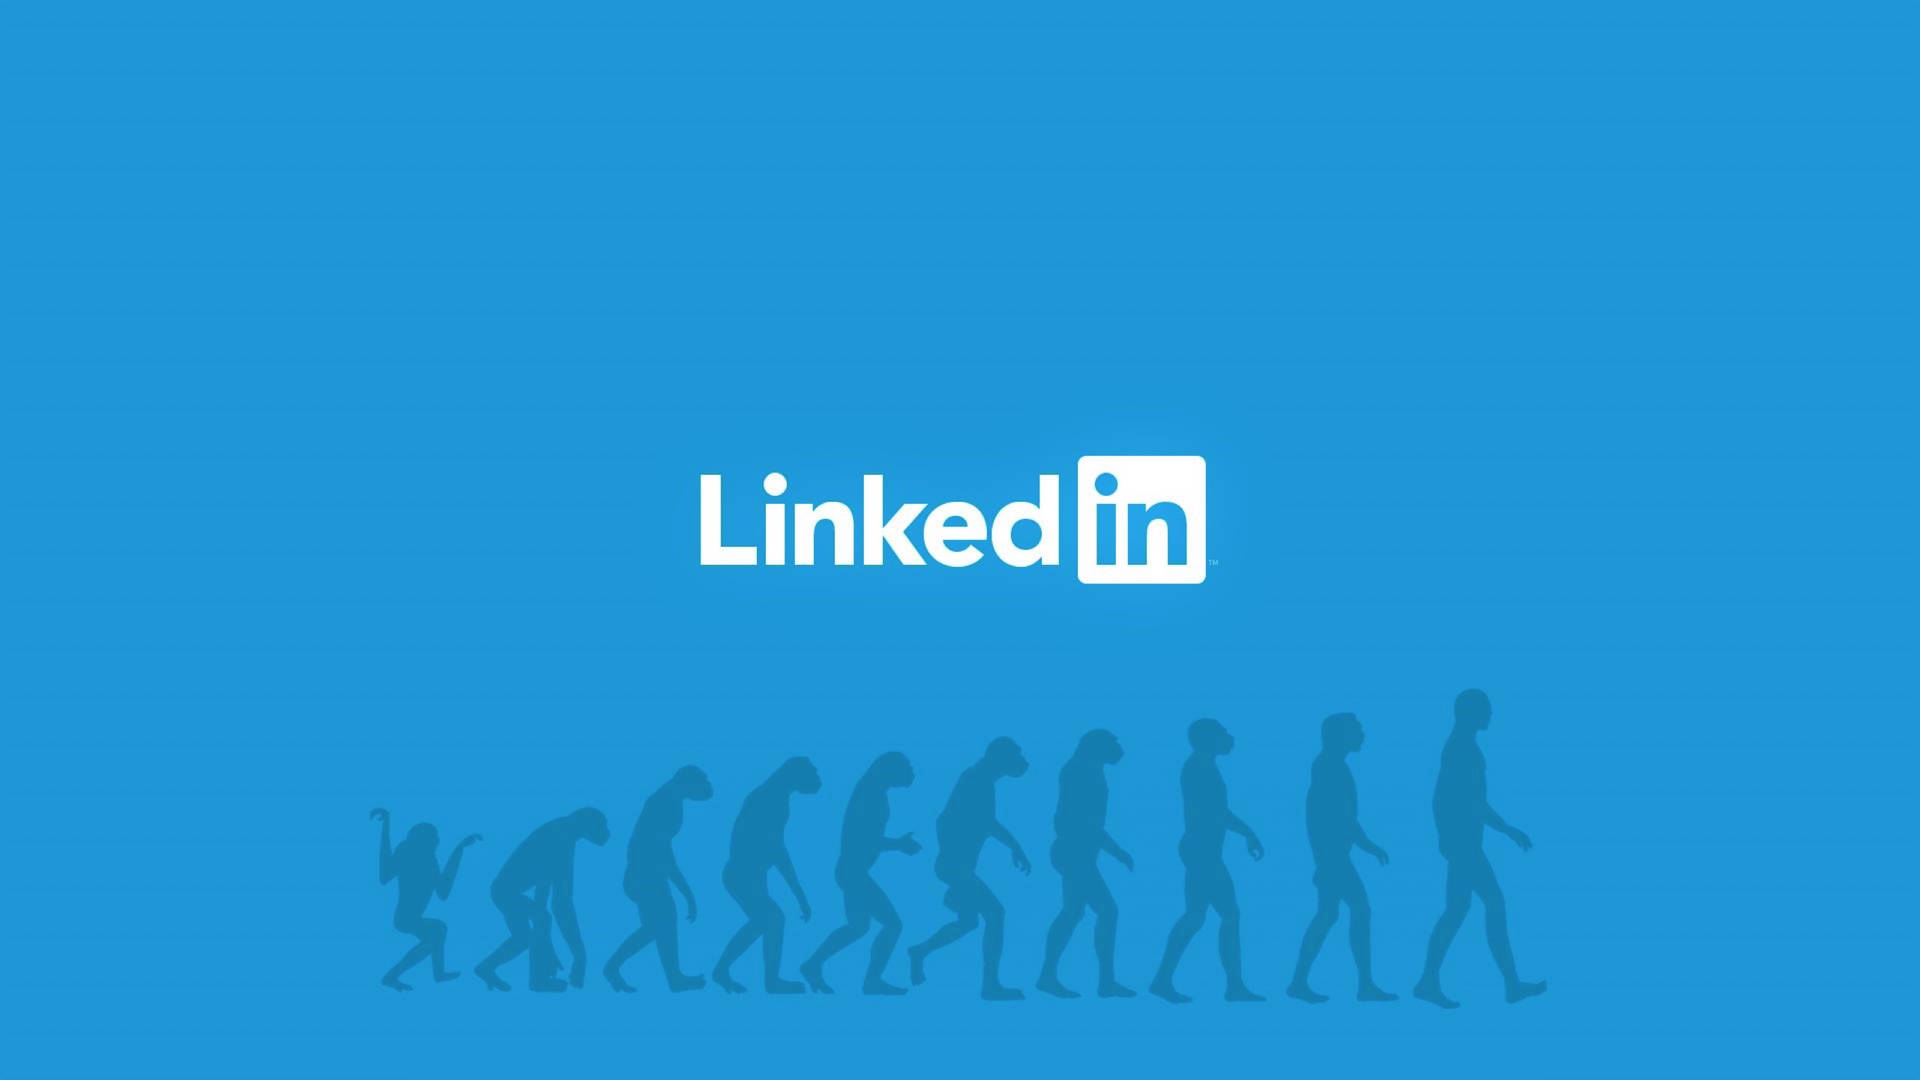 Linkedin Evolution Of Man